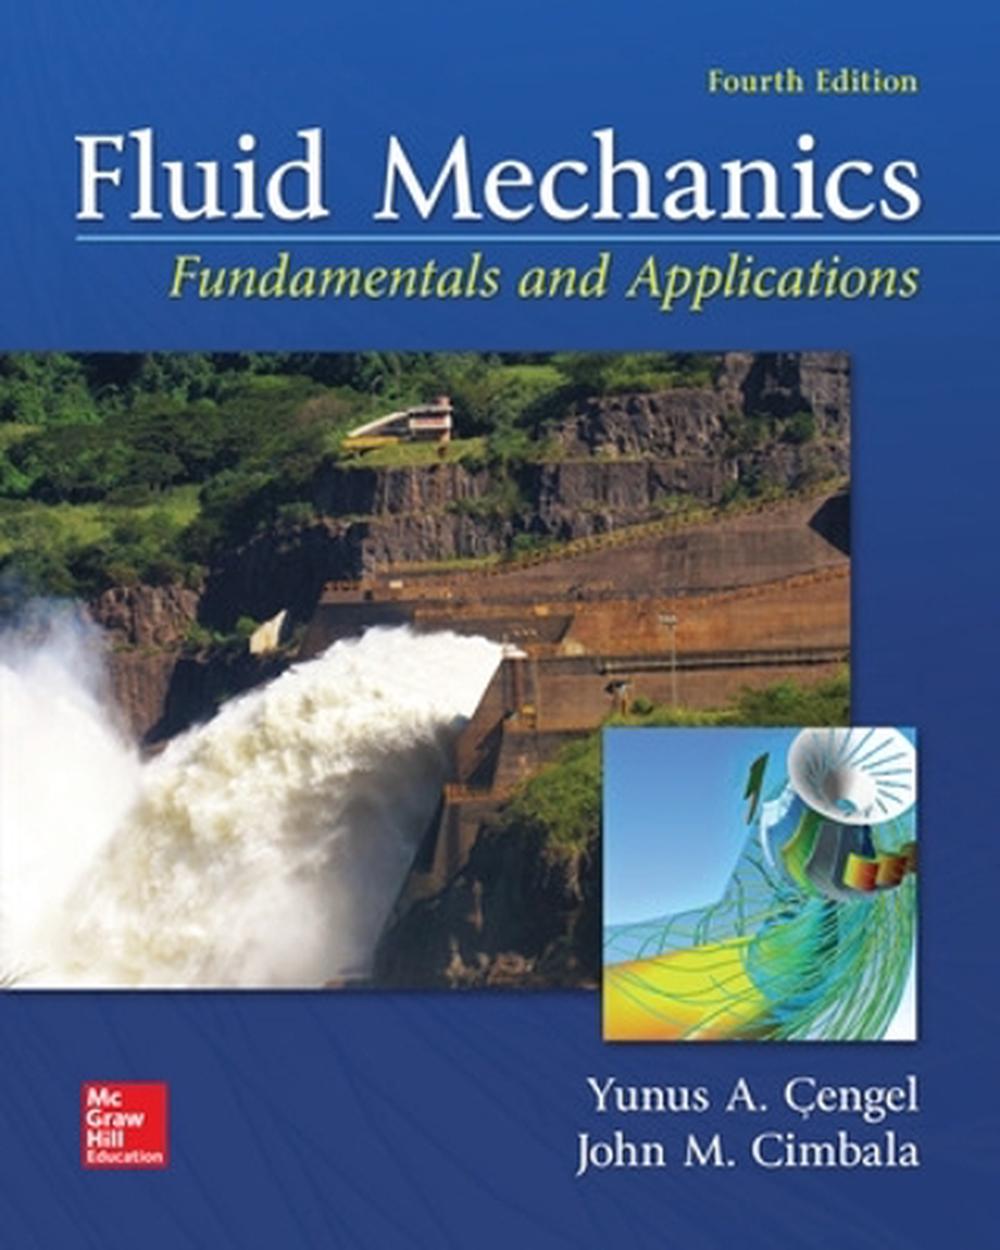 Fluid Mechanics Fundamentals and Applications 4th Edition by Yunus A